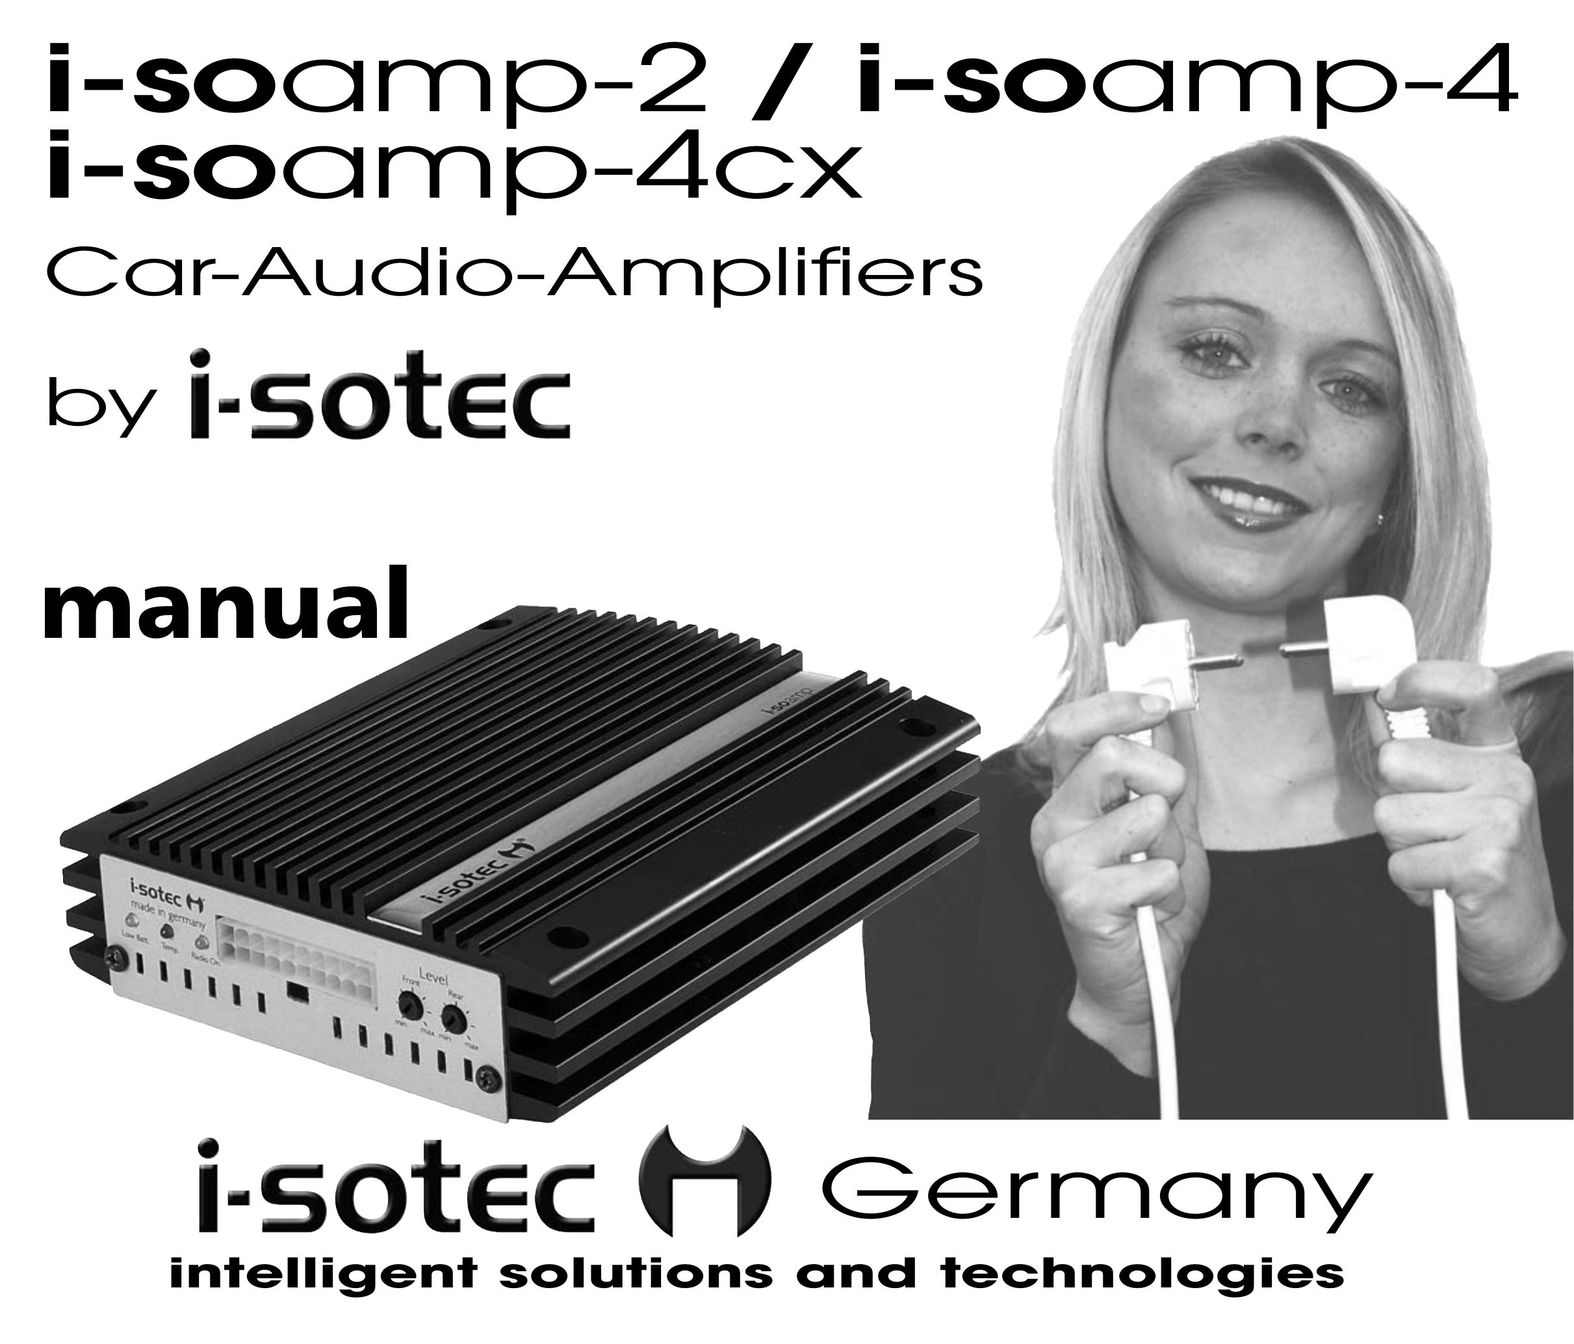 Braun i-soamp-2 Car Amplifier User Manual